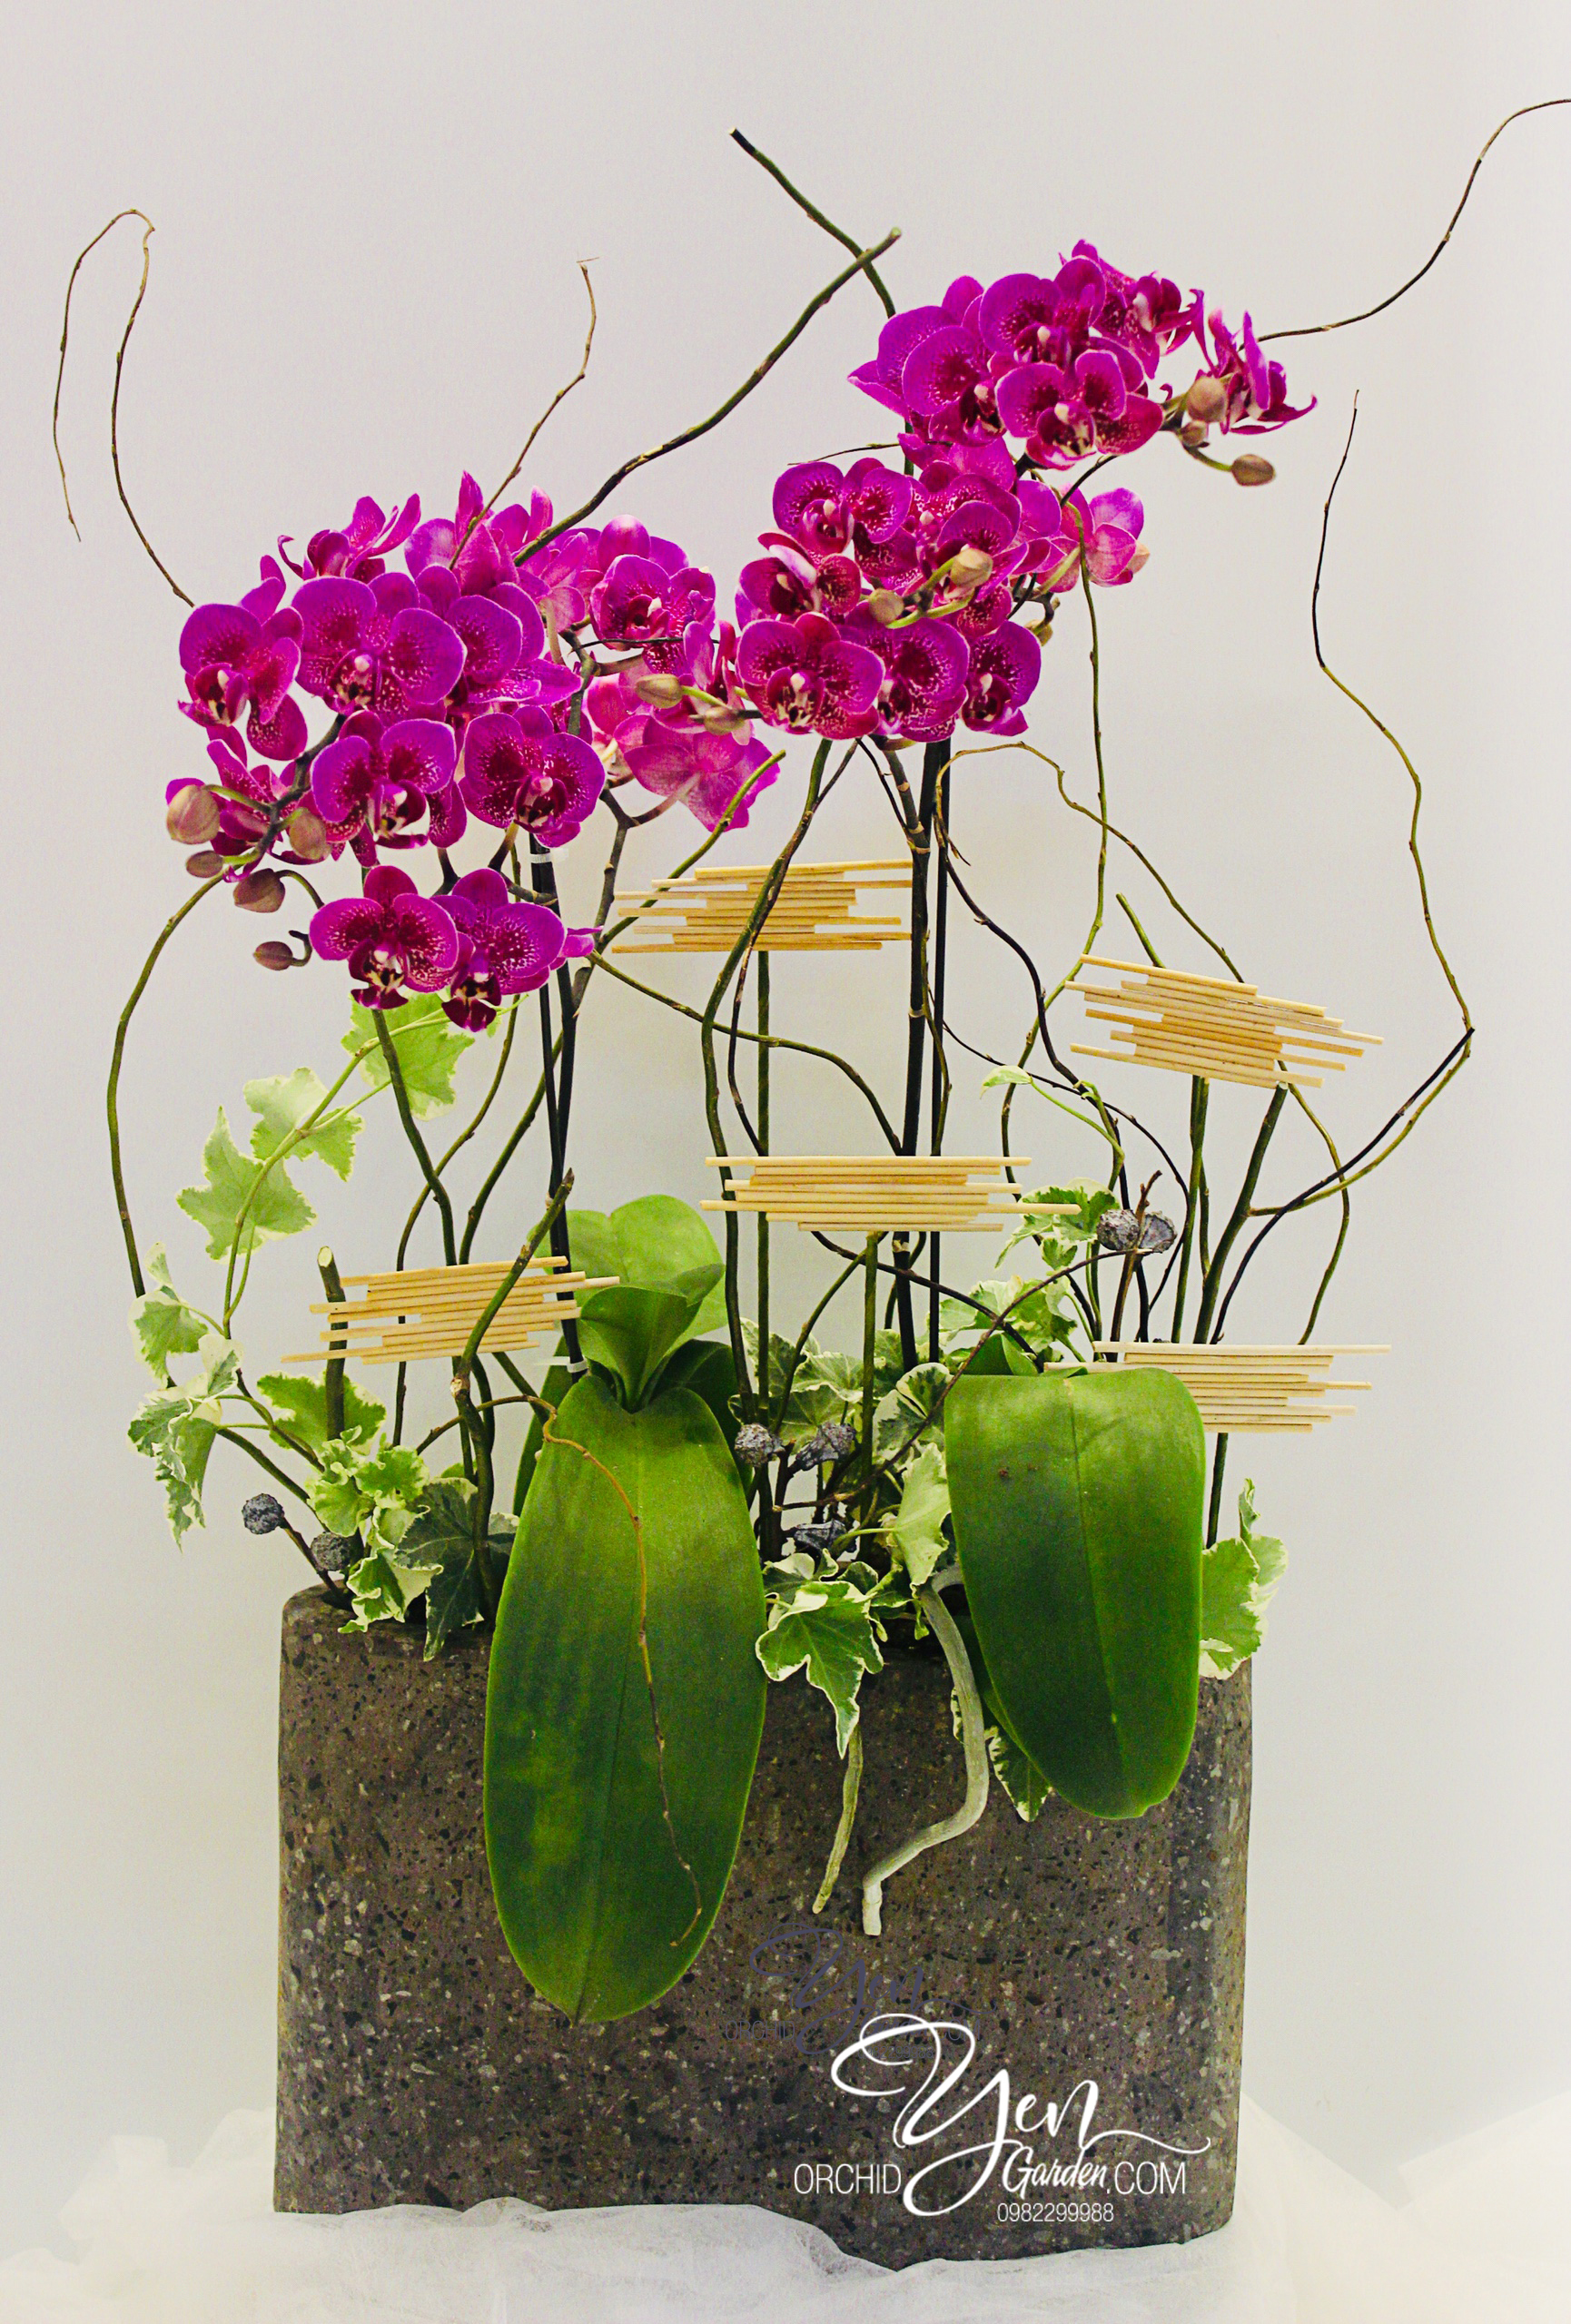 Design Orchid Gardens